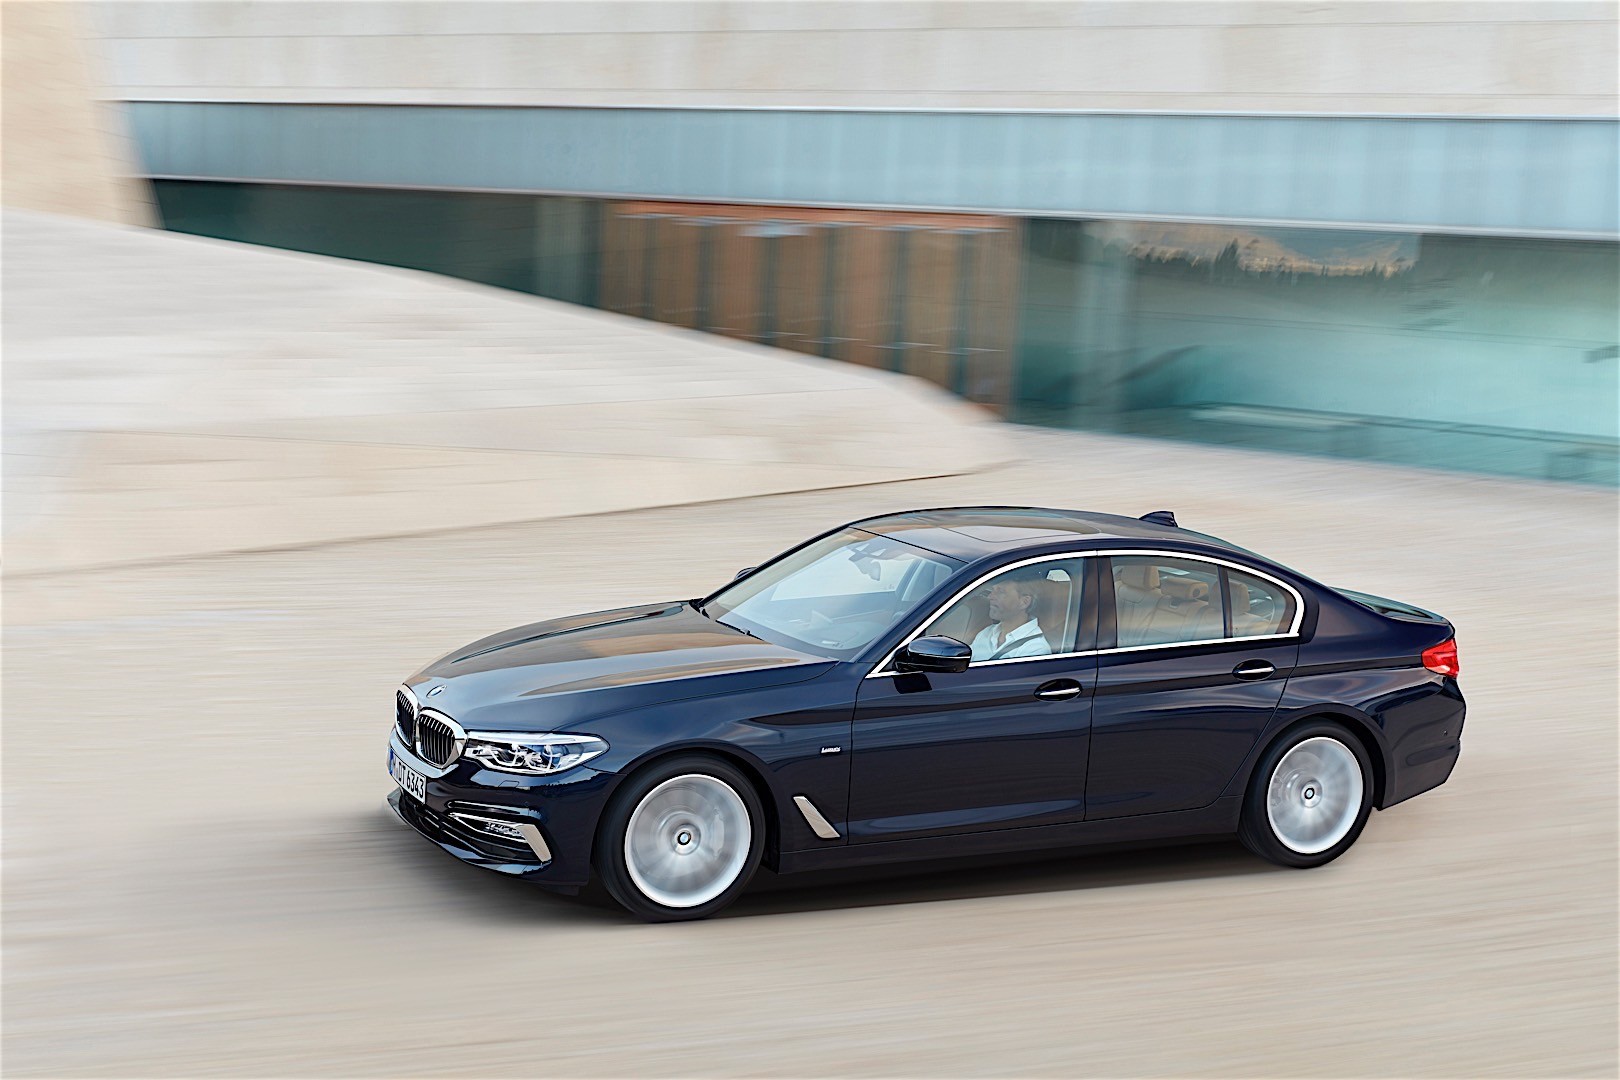 BMW Vehicles Decreased 3.4% in U.S. in October